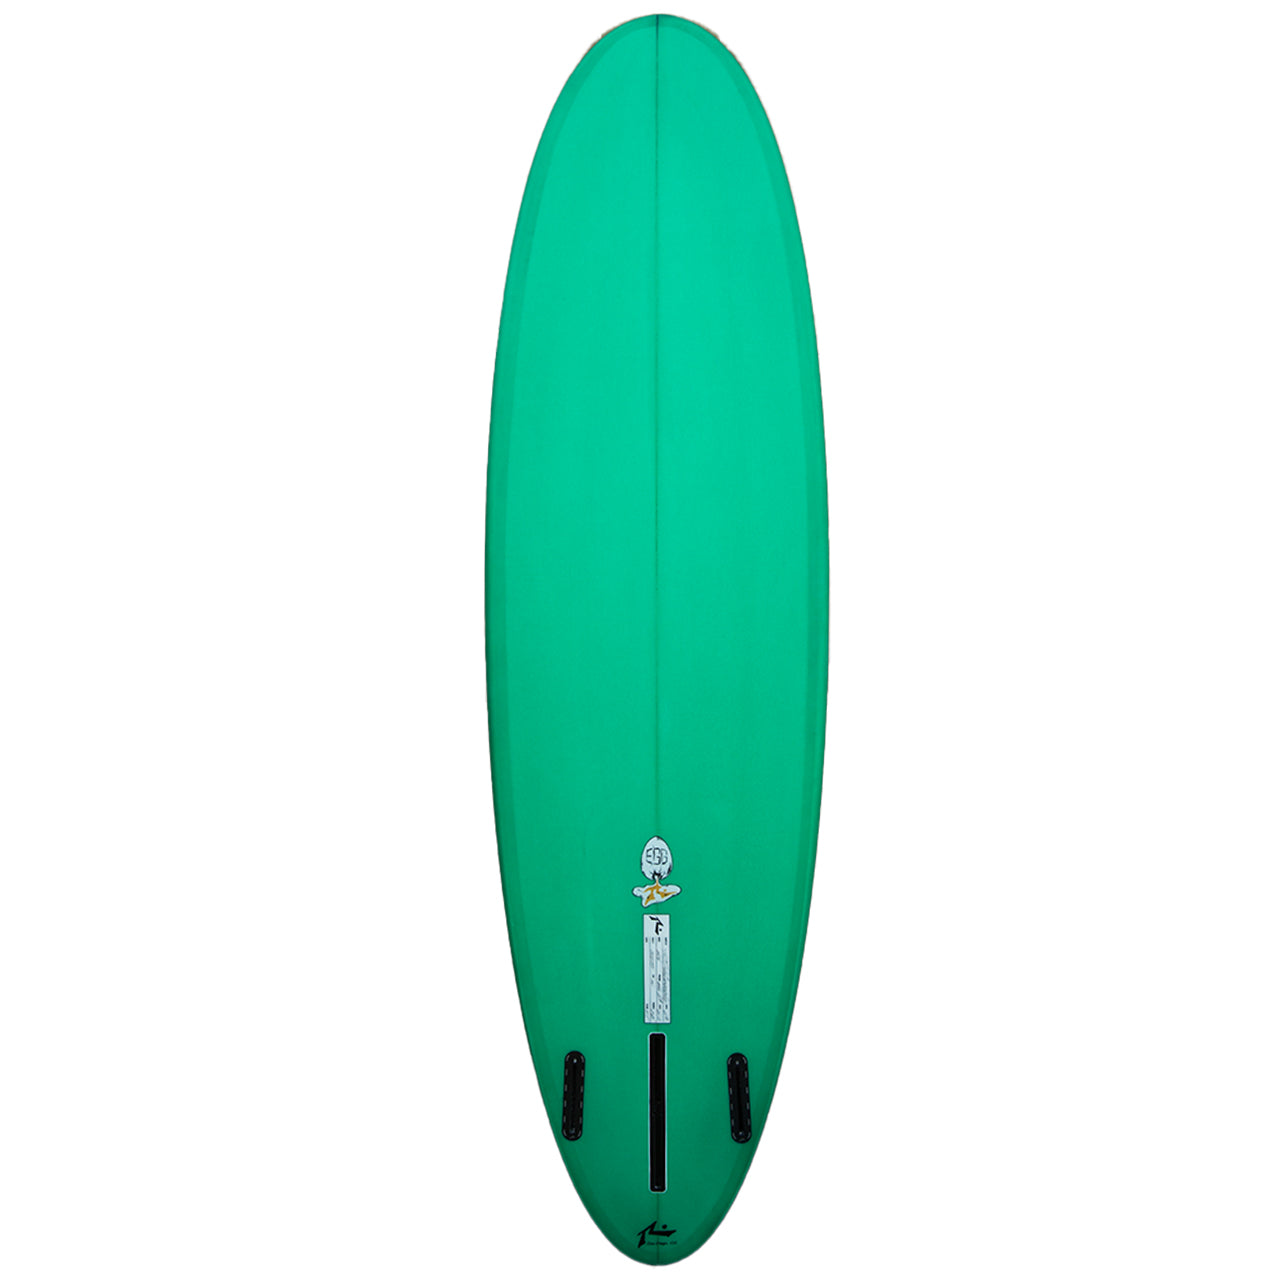 Iregreen surf Board